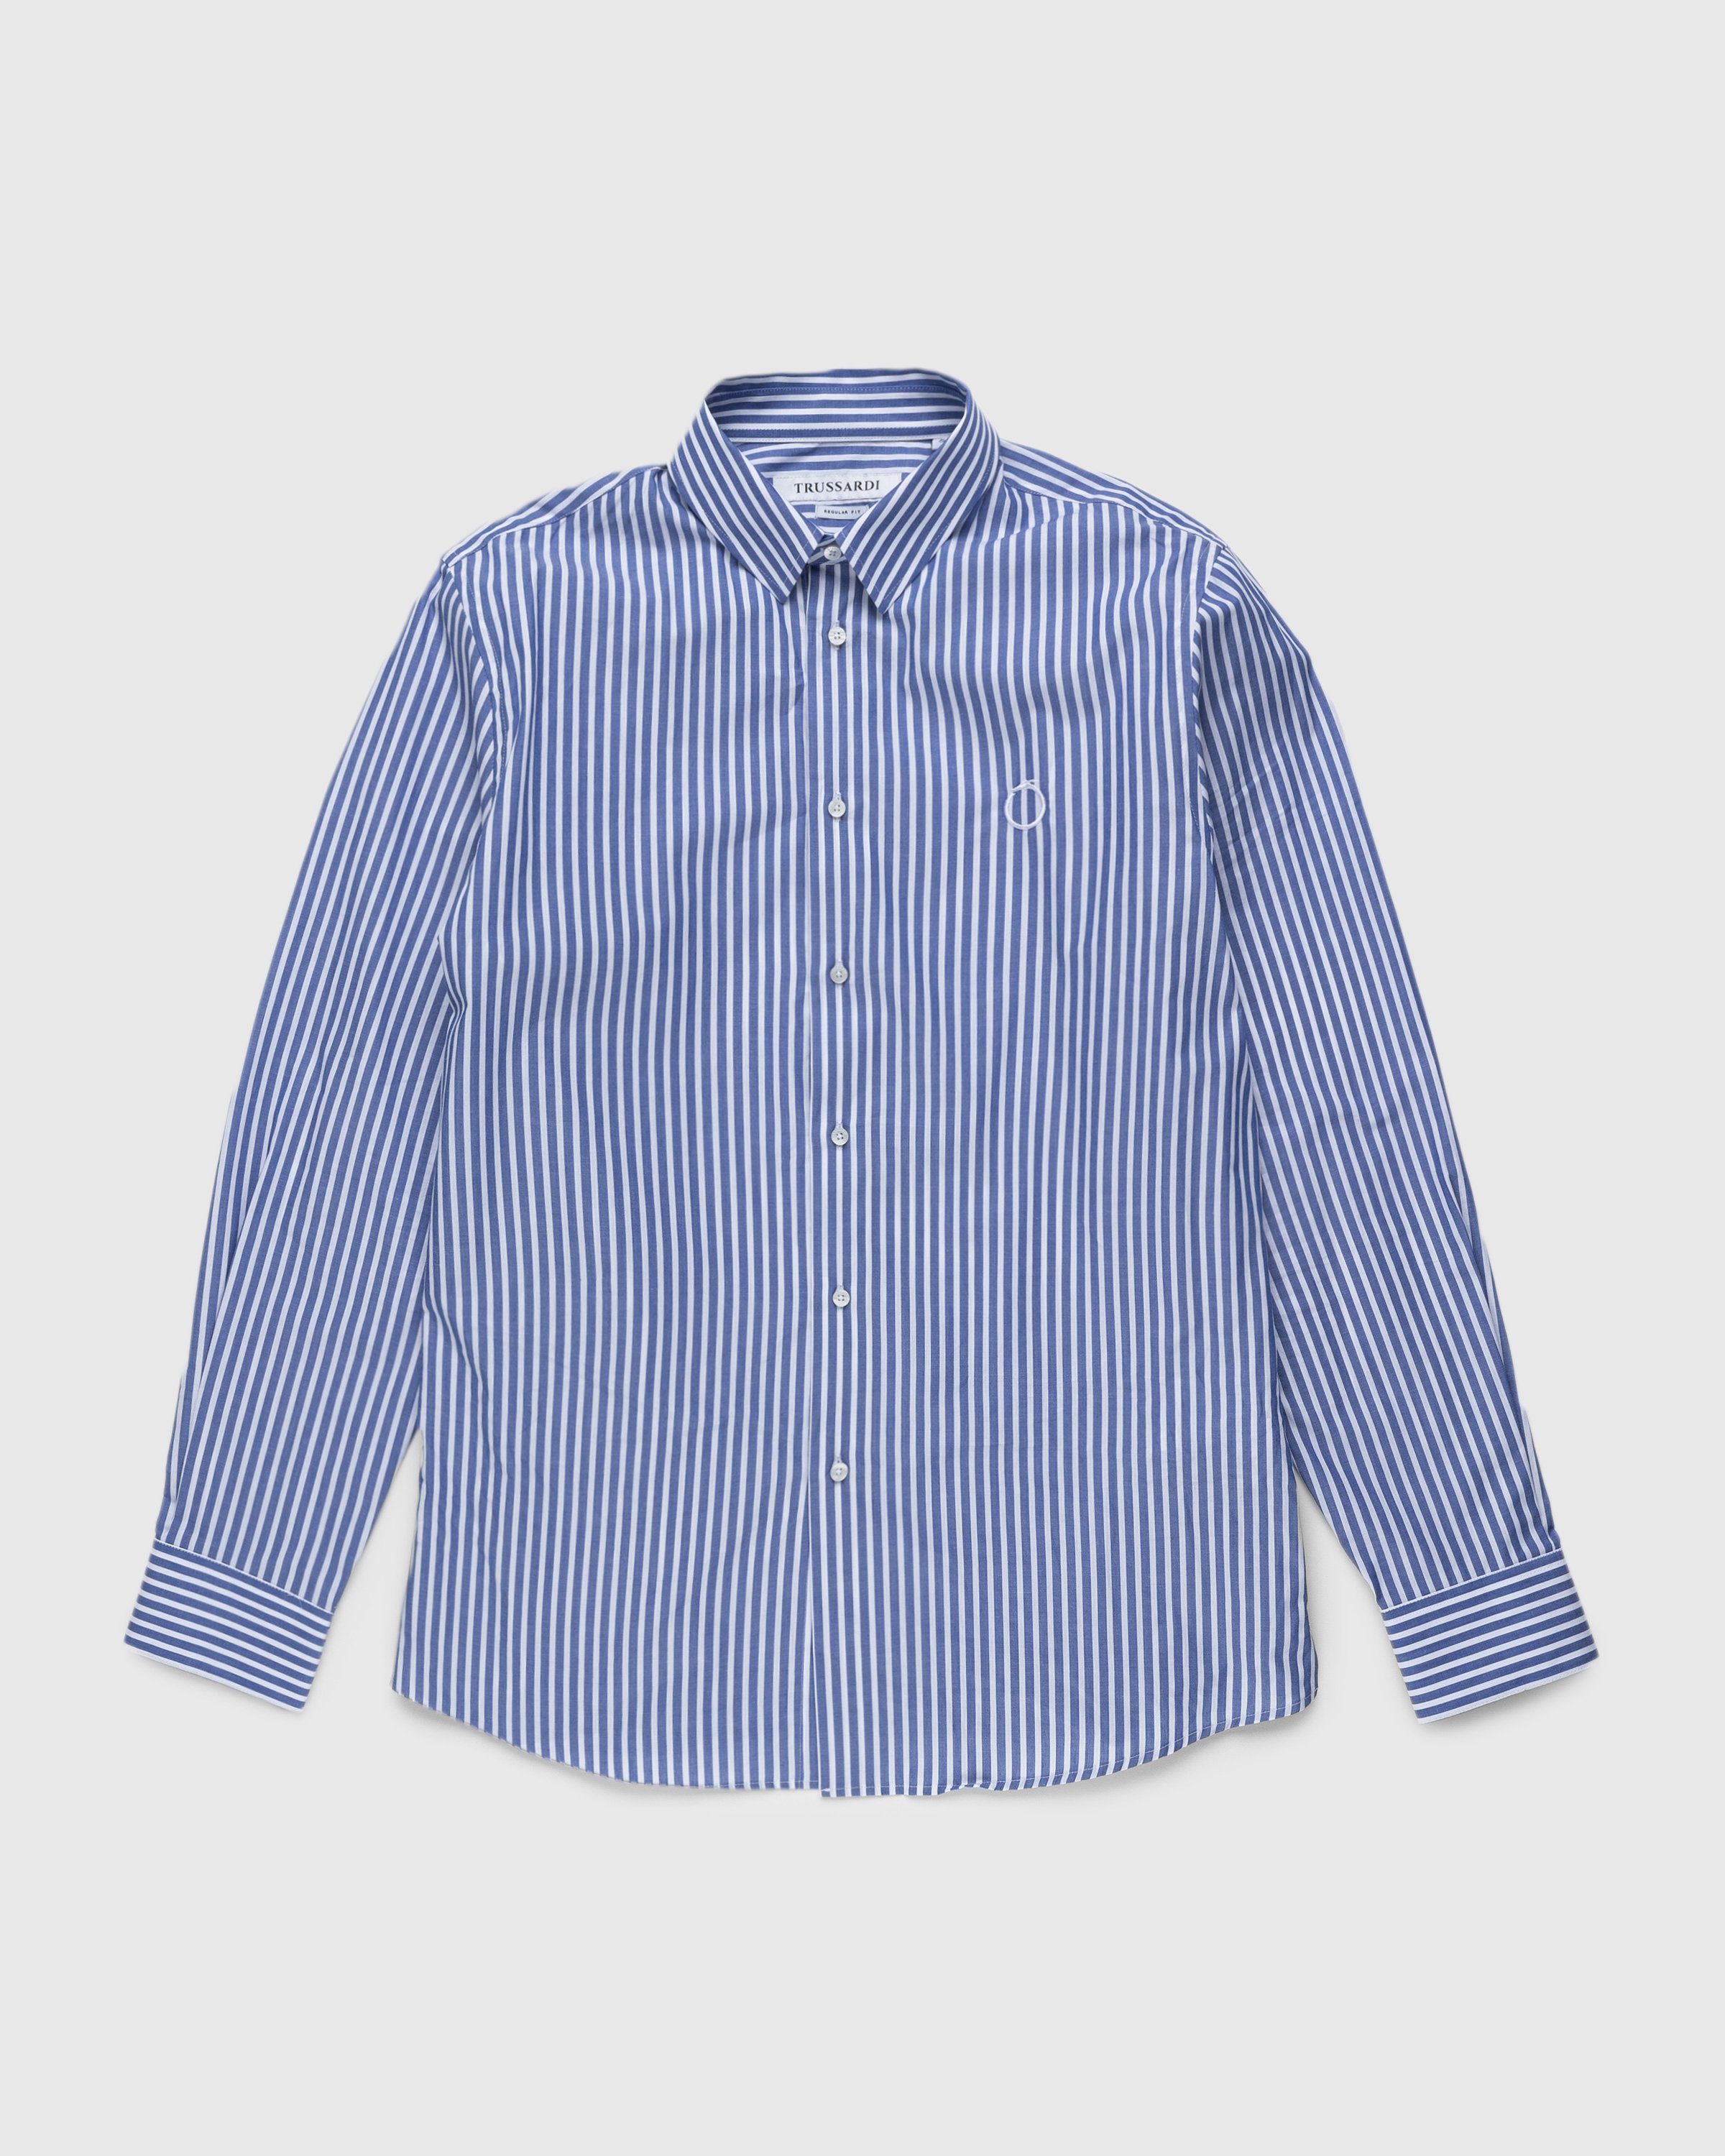 Trussardi - Shirt Cotton White Azure Stripes - Clothing - White - Image 1